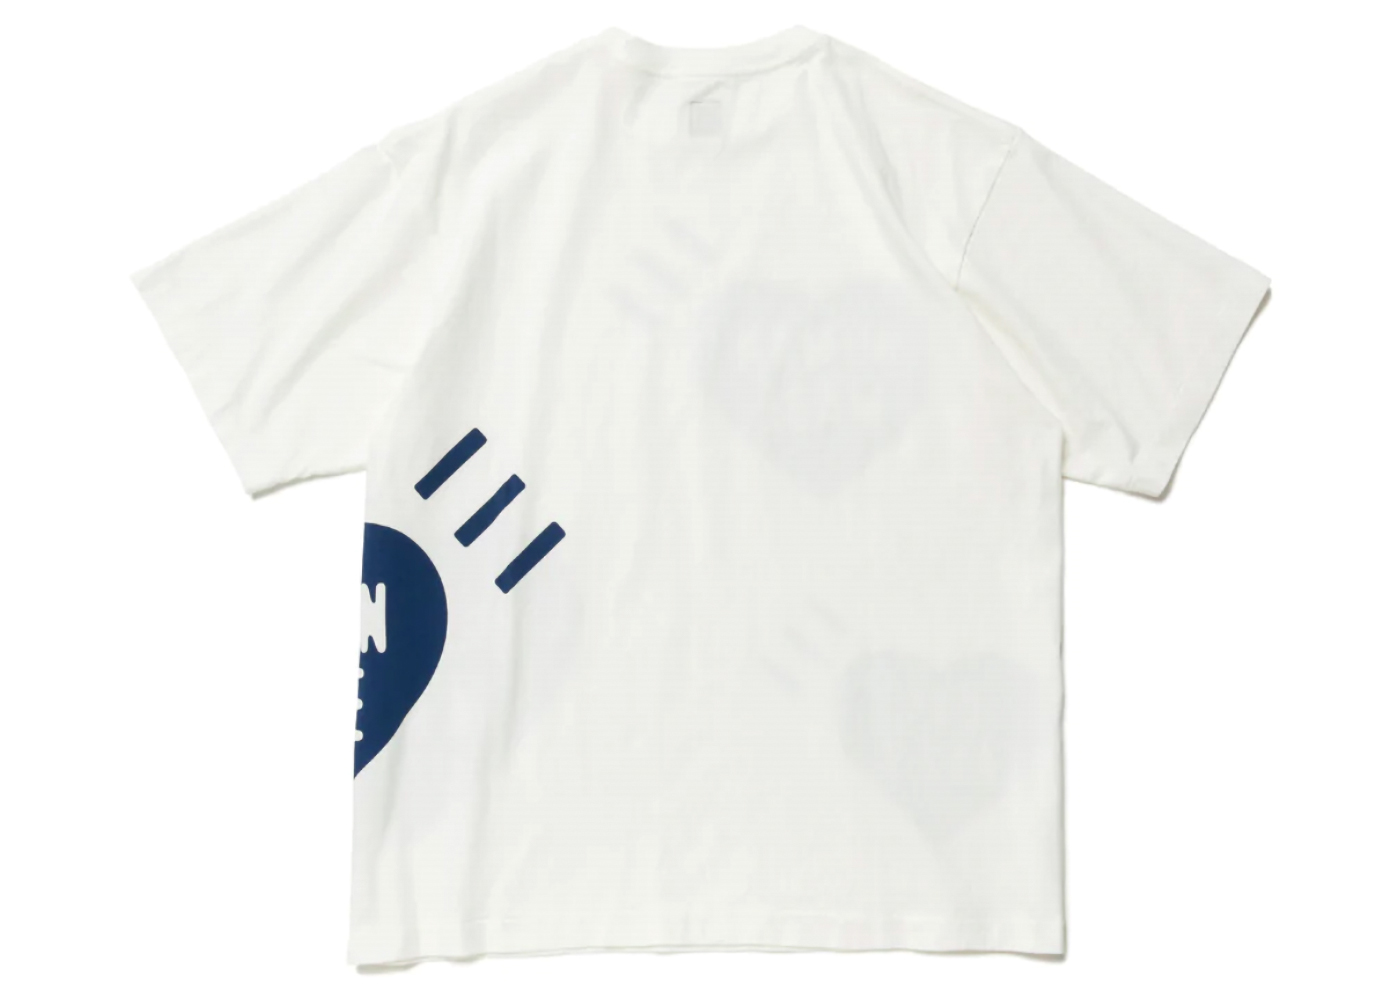 Human Made Big Heart T-Shirt White Navy